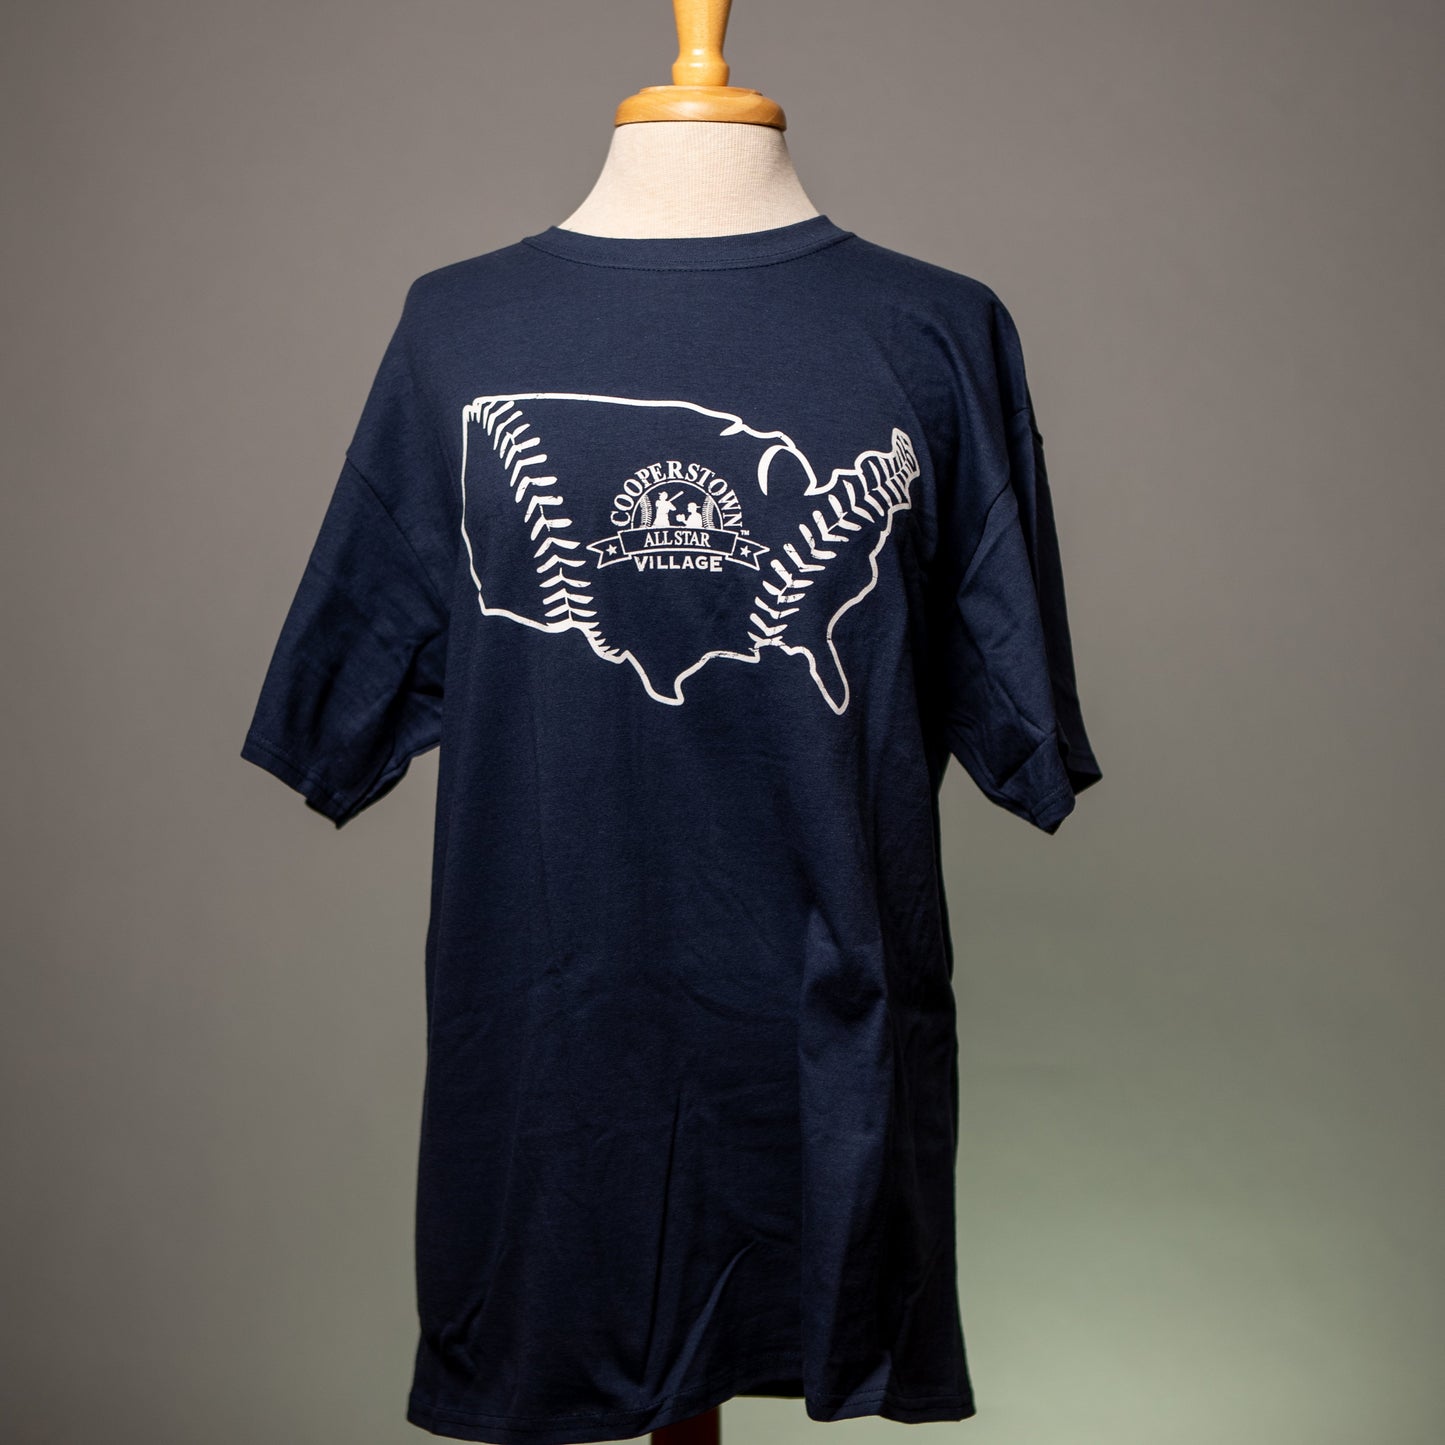 United States w/ Stitches Cooperstown All Star Village T-shirt